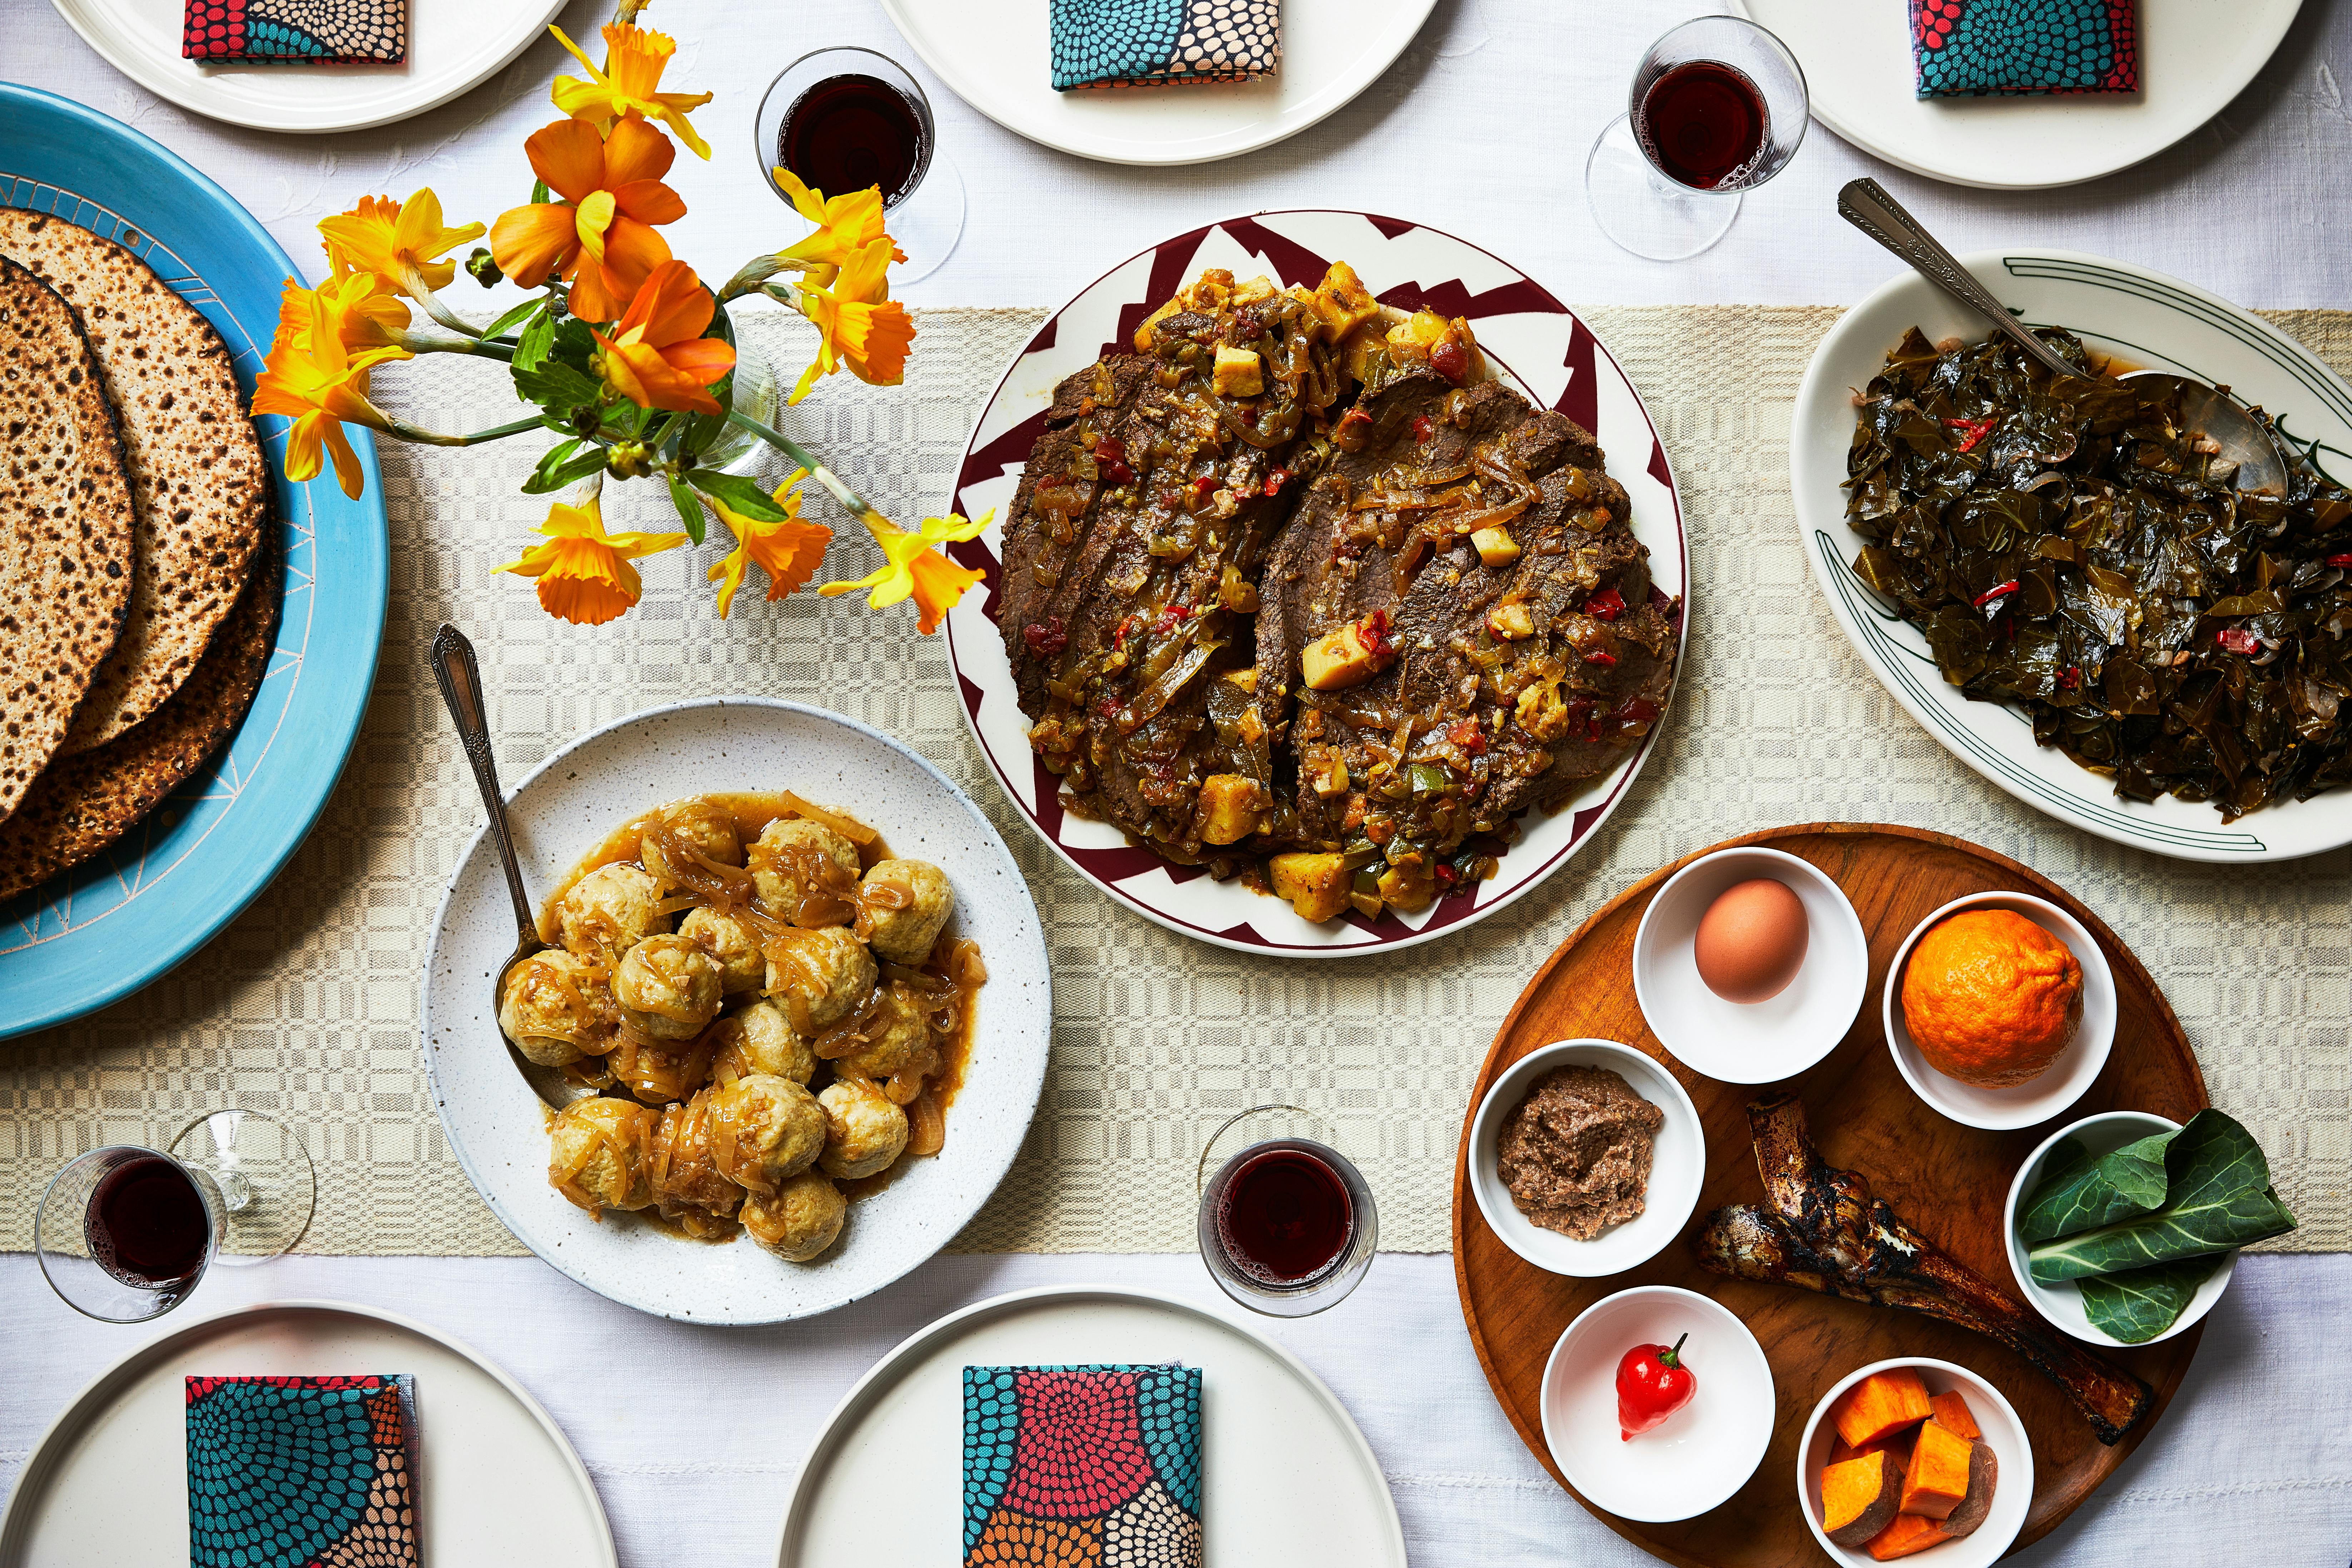 West African Passover tablespread with brisket, collards, kneidlach in yassa sauce, matzah and seder plate.